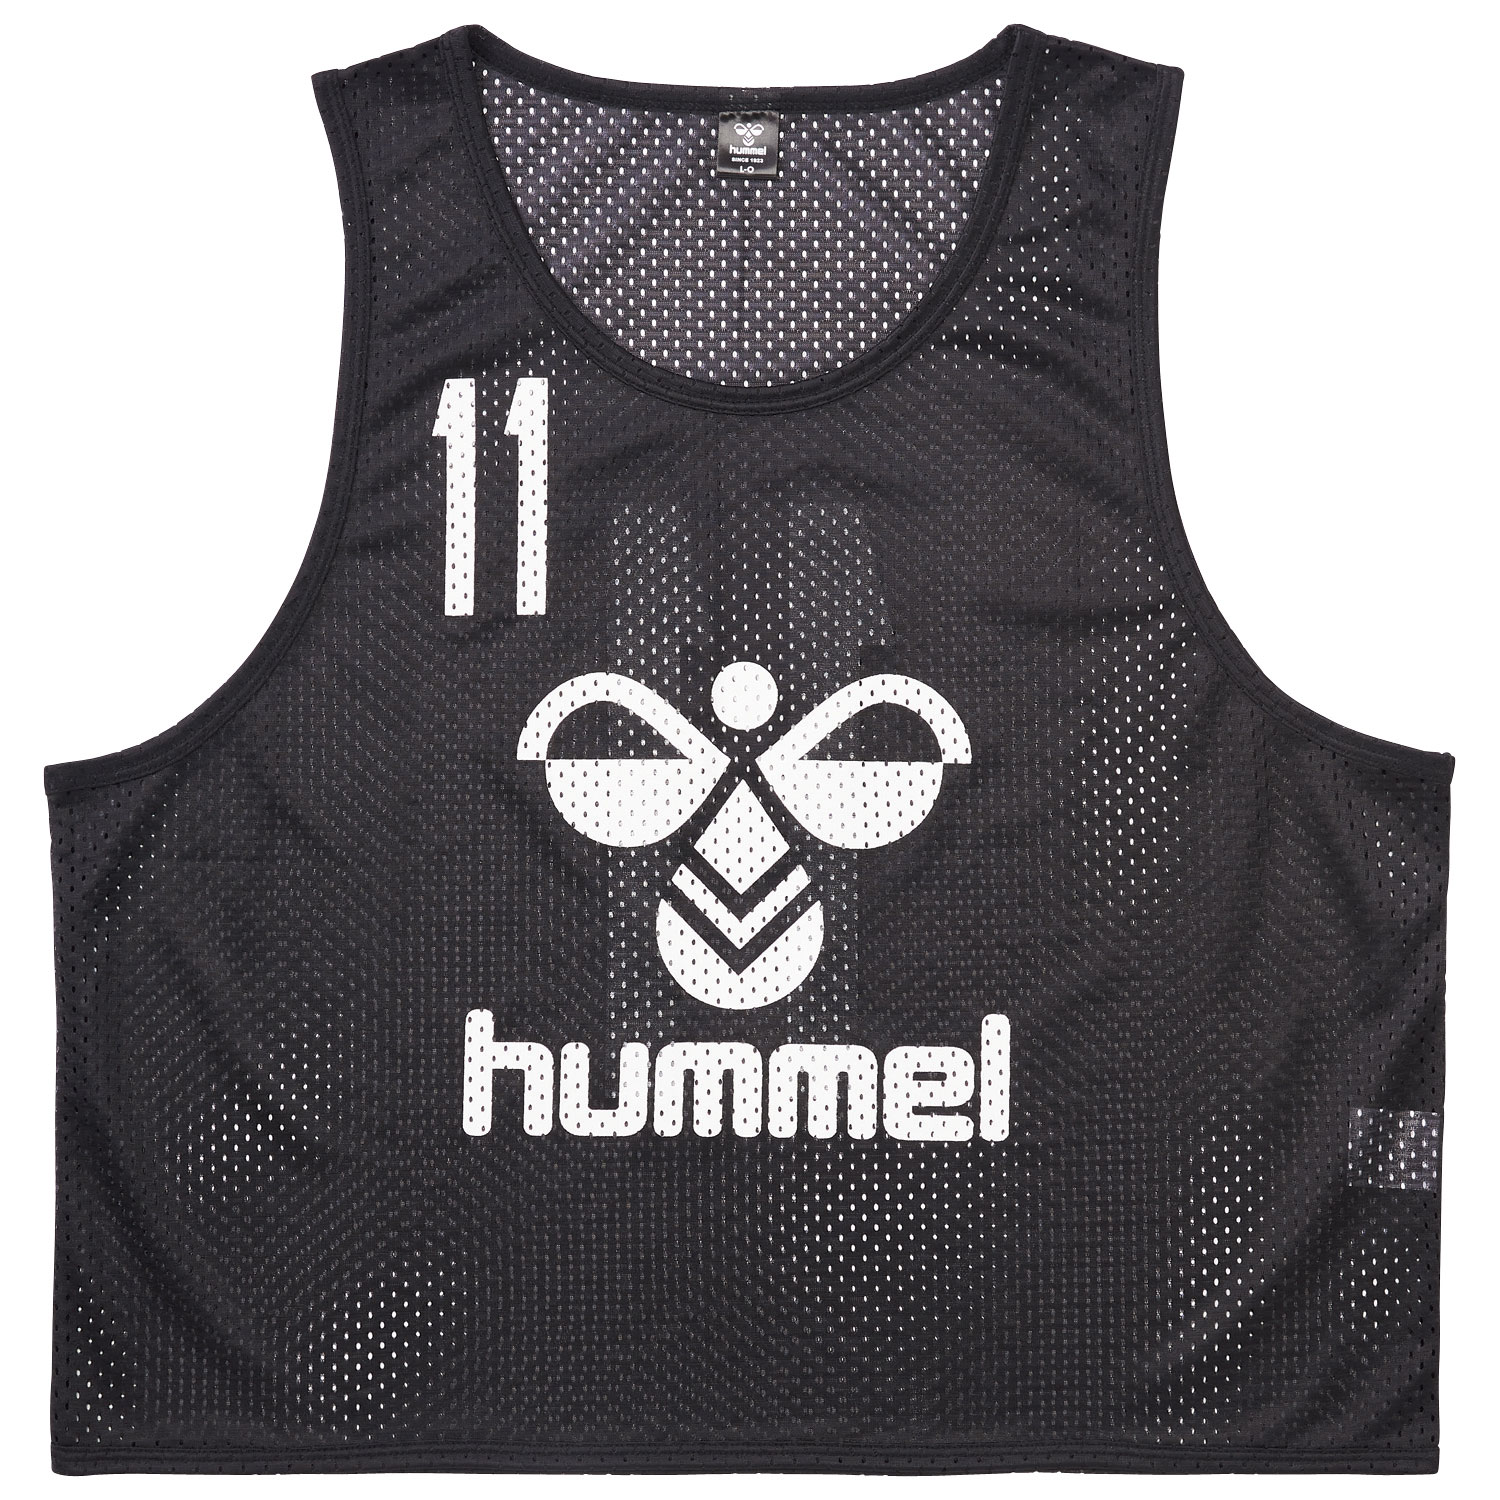 hummel(ヒュンメル)-S ジュニアトレーニングビブス(10枚セット 